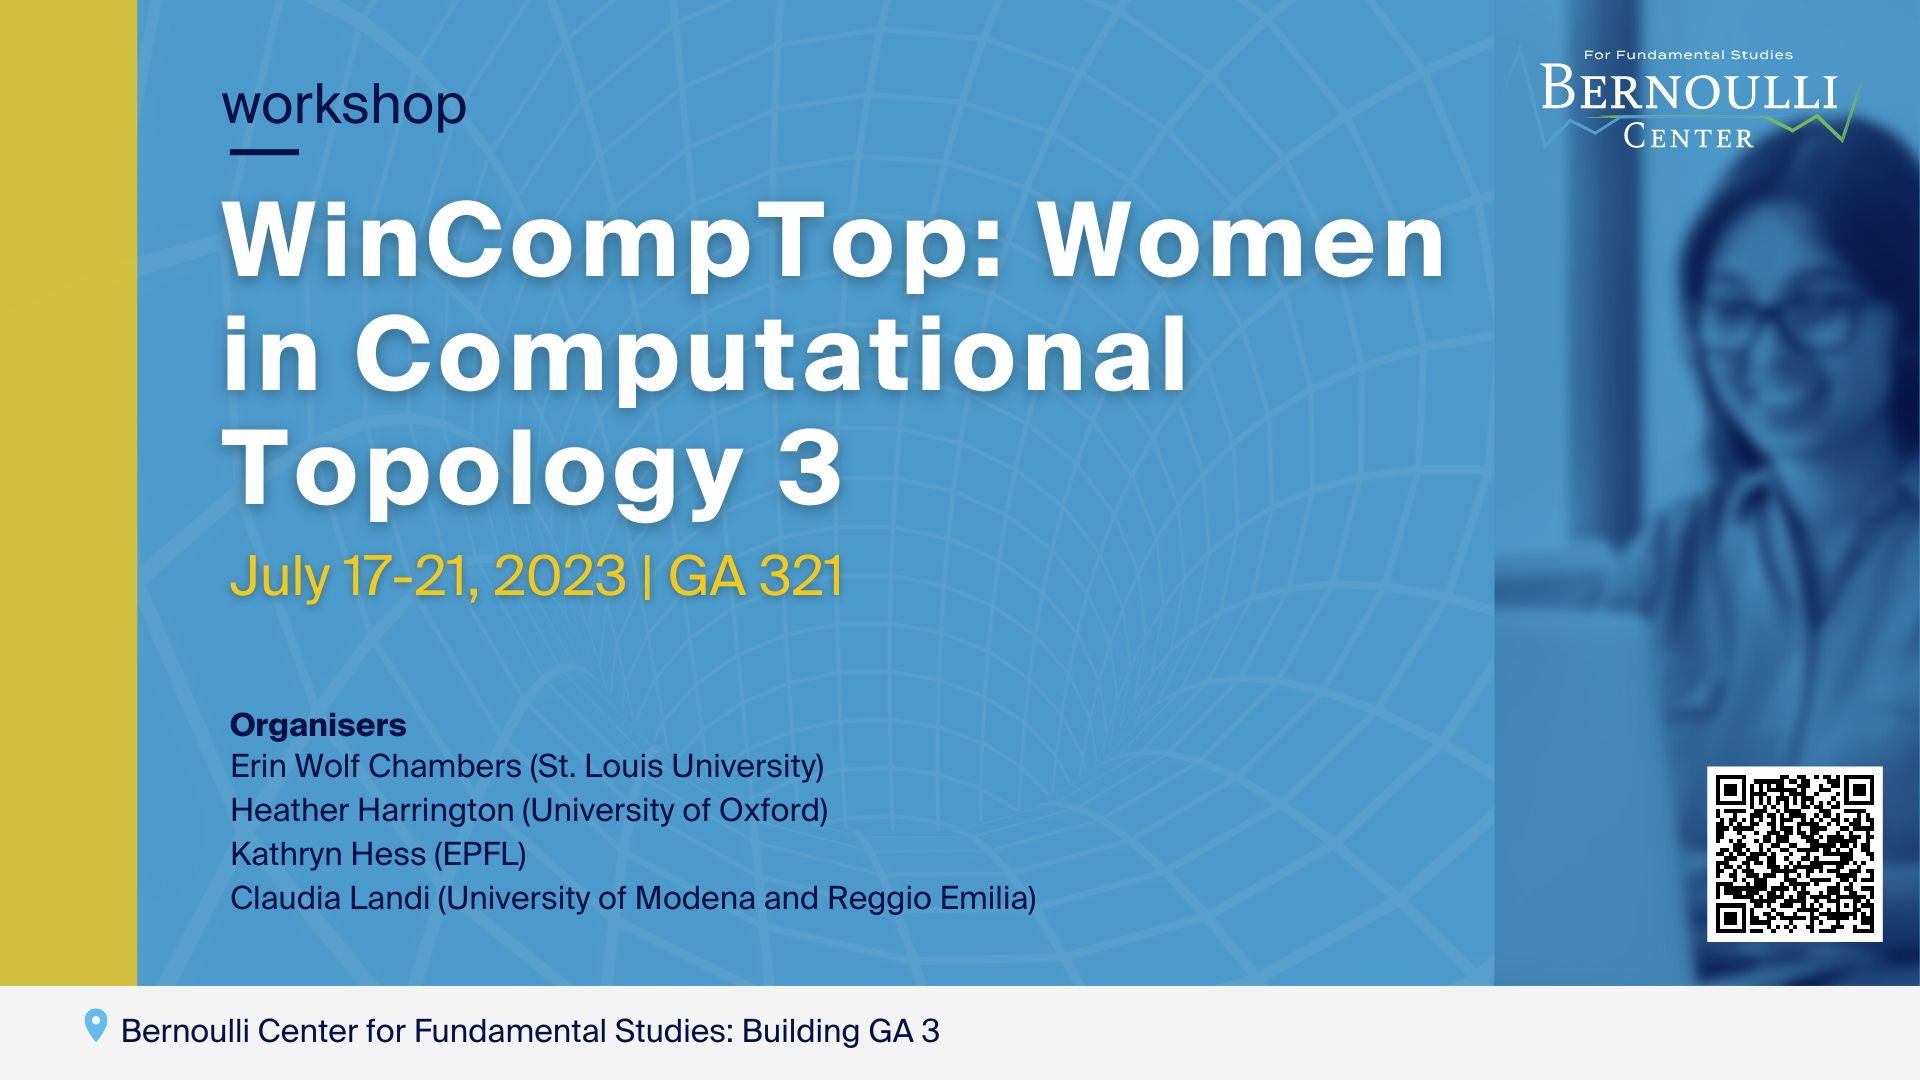 WinCompTop Women in Computational Topology 3